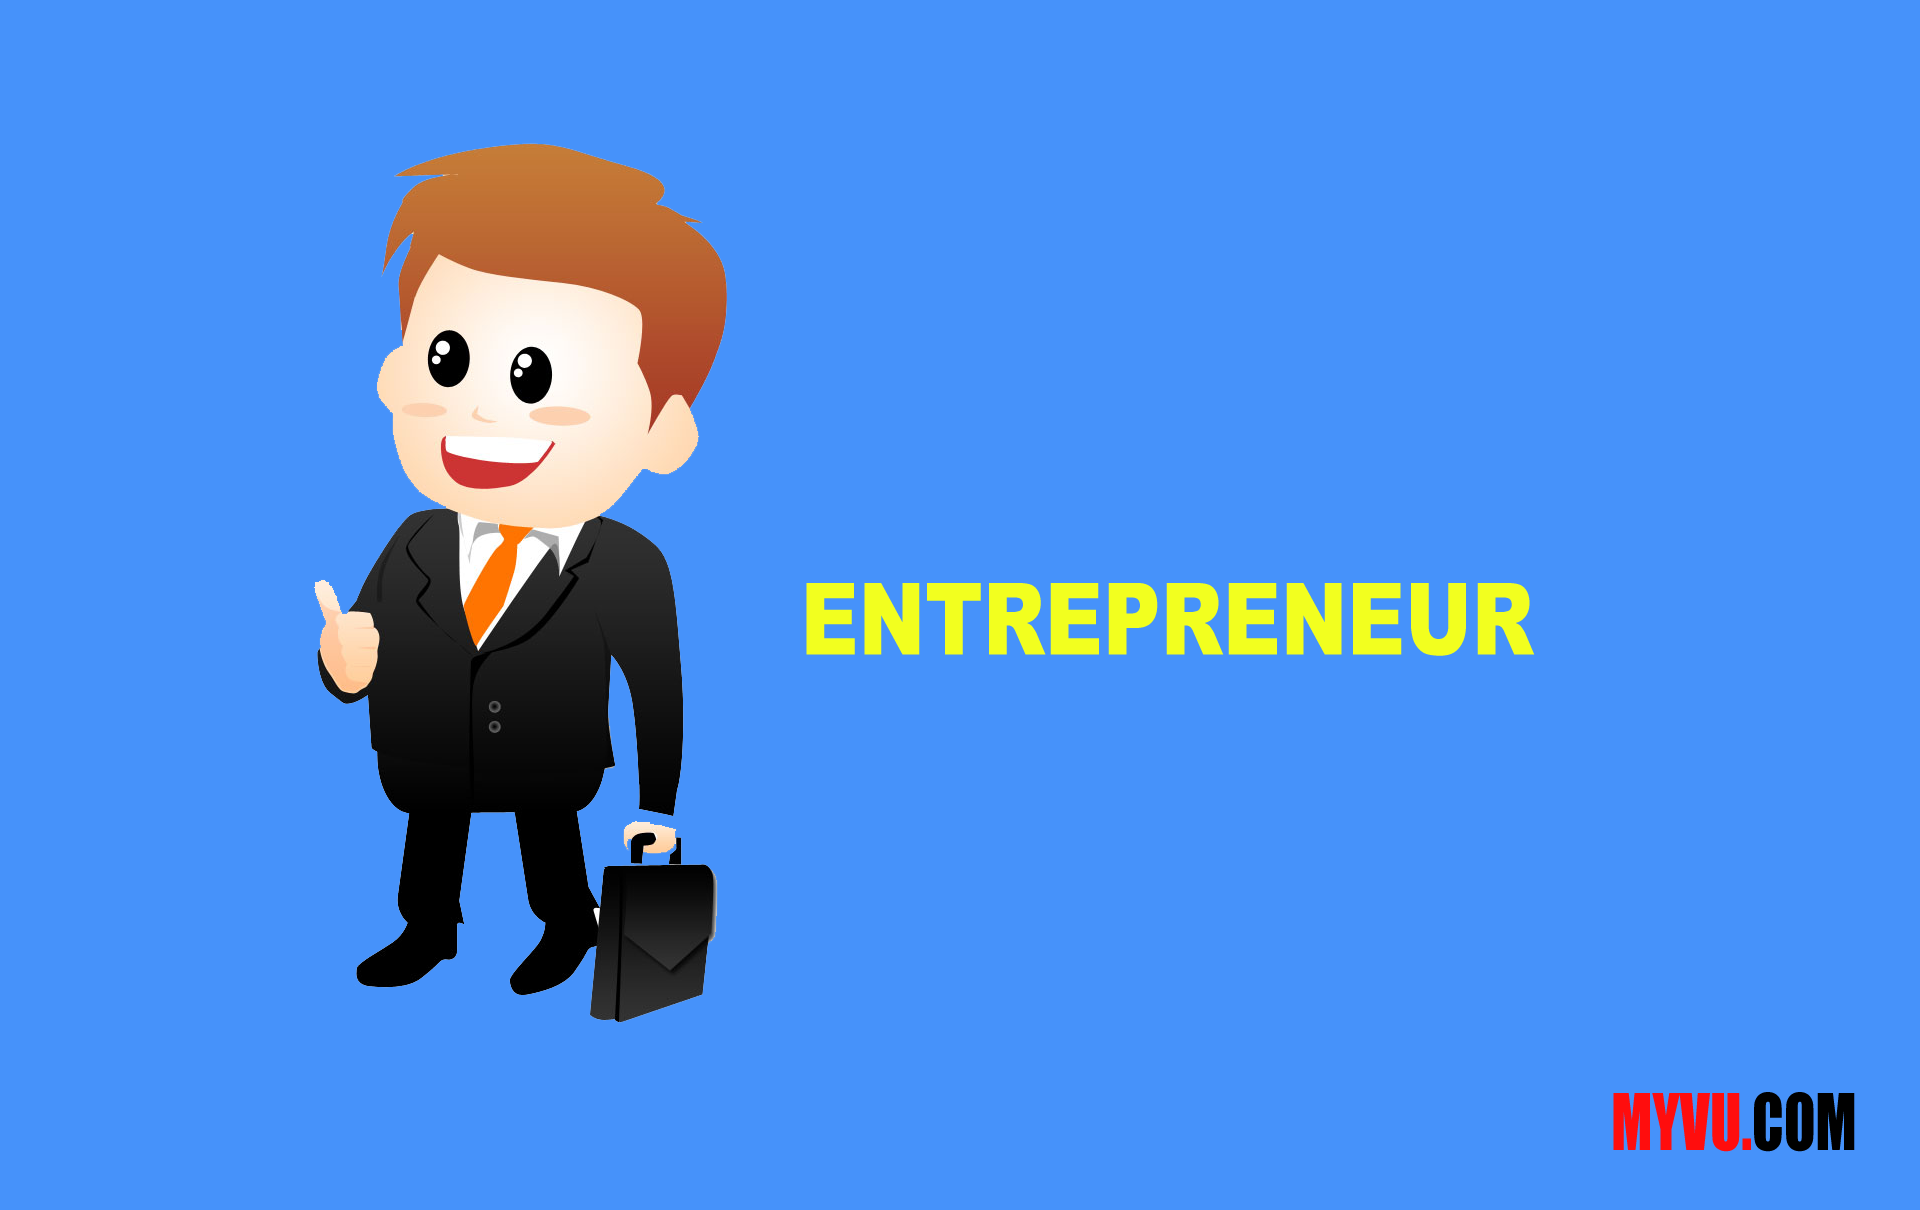 50+ Entrepreneurship Blogs Every Entrepreneur should Follow – Complete Guide